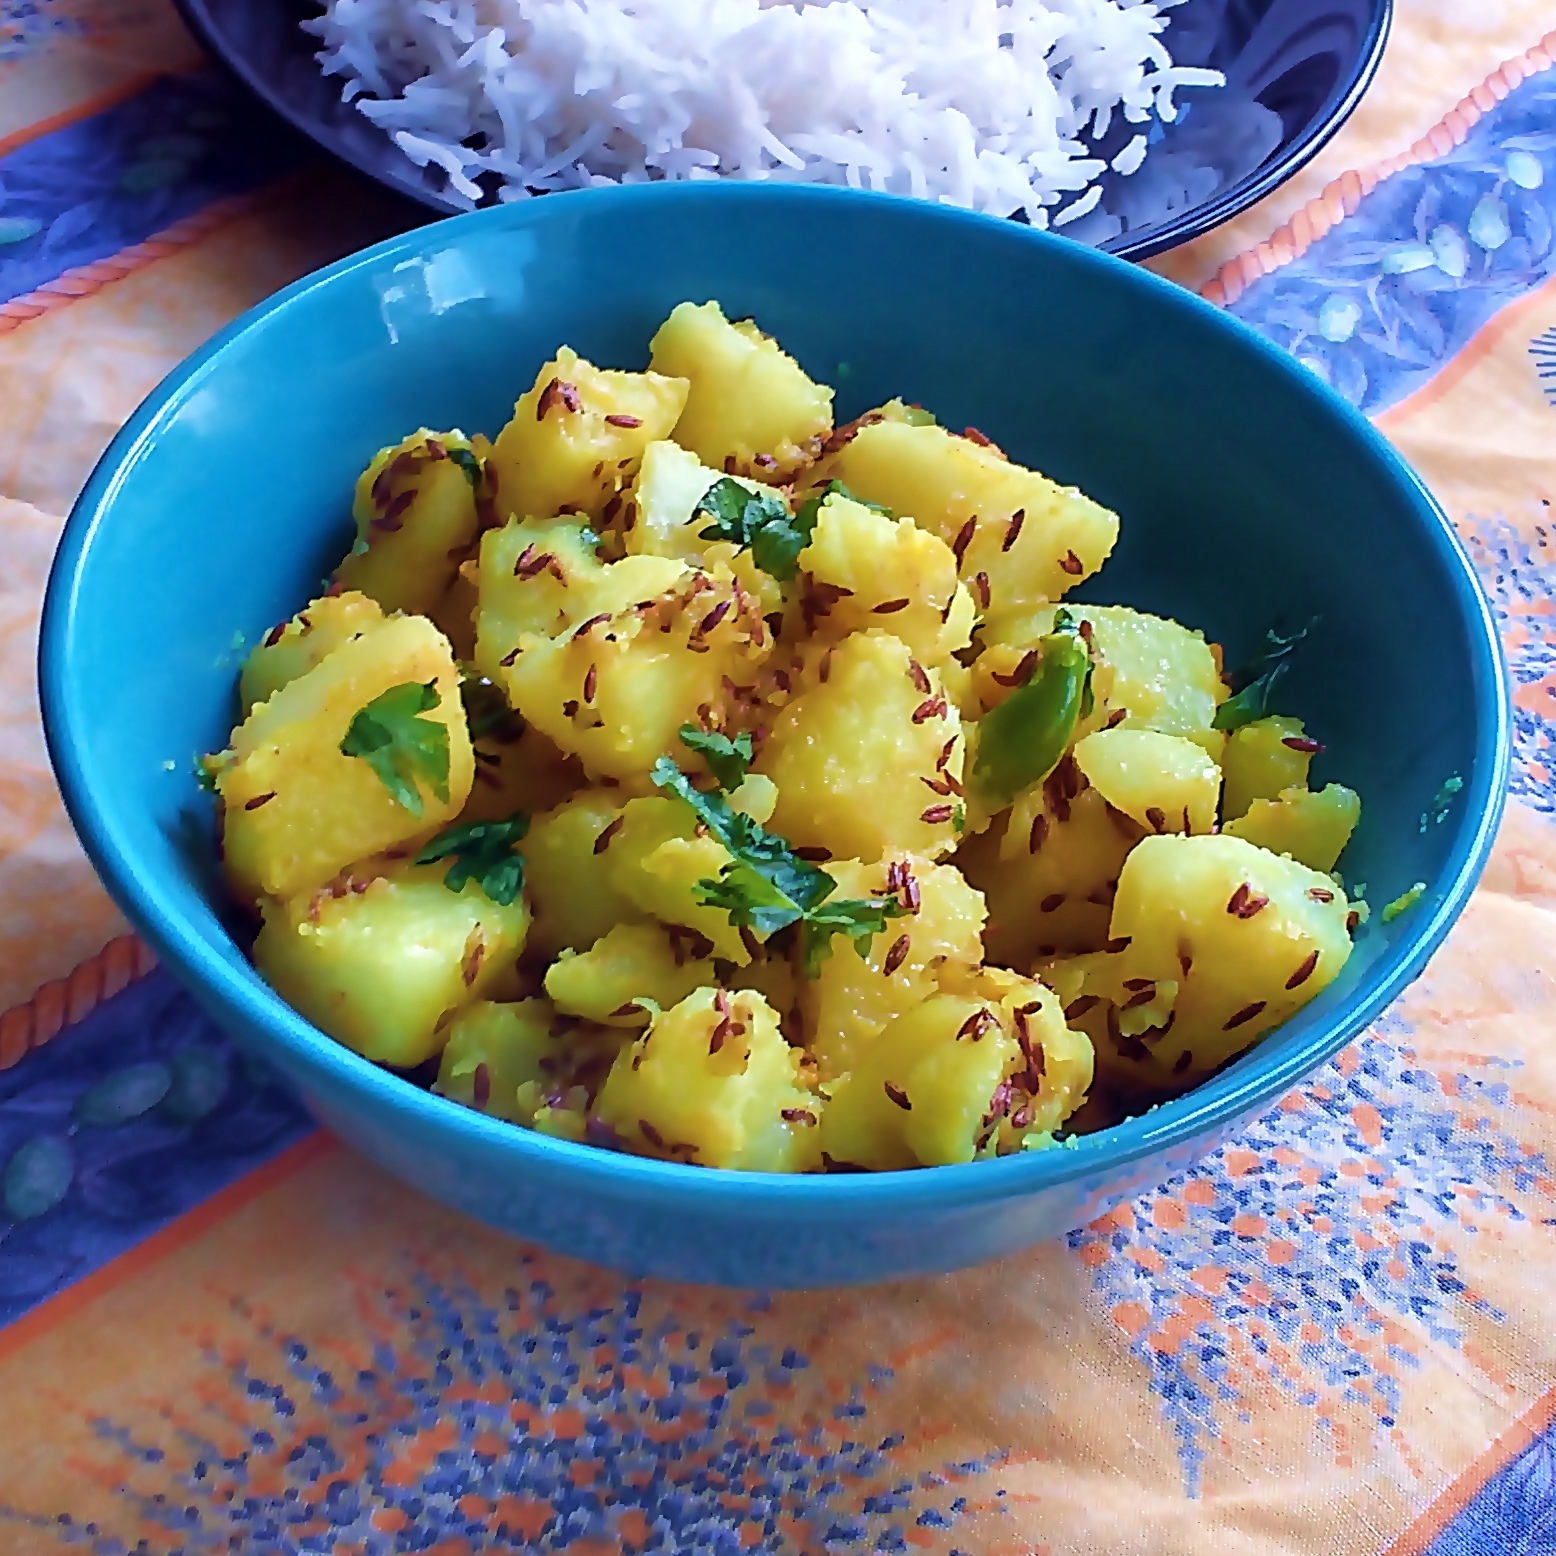 Punjabi cuisine Recipes - My Indian Taste